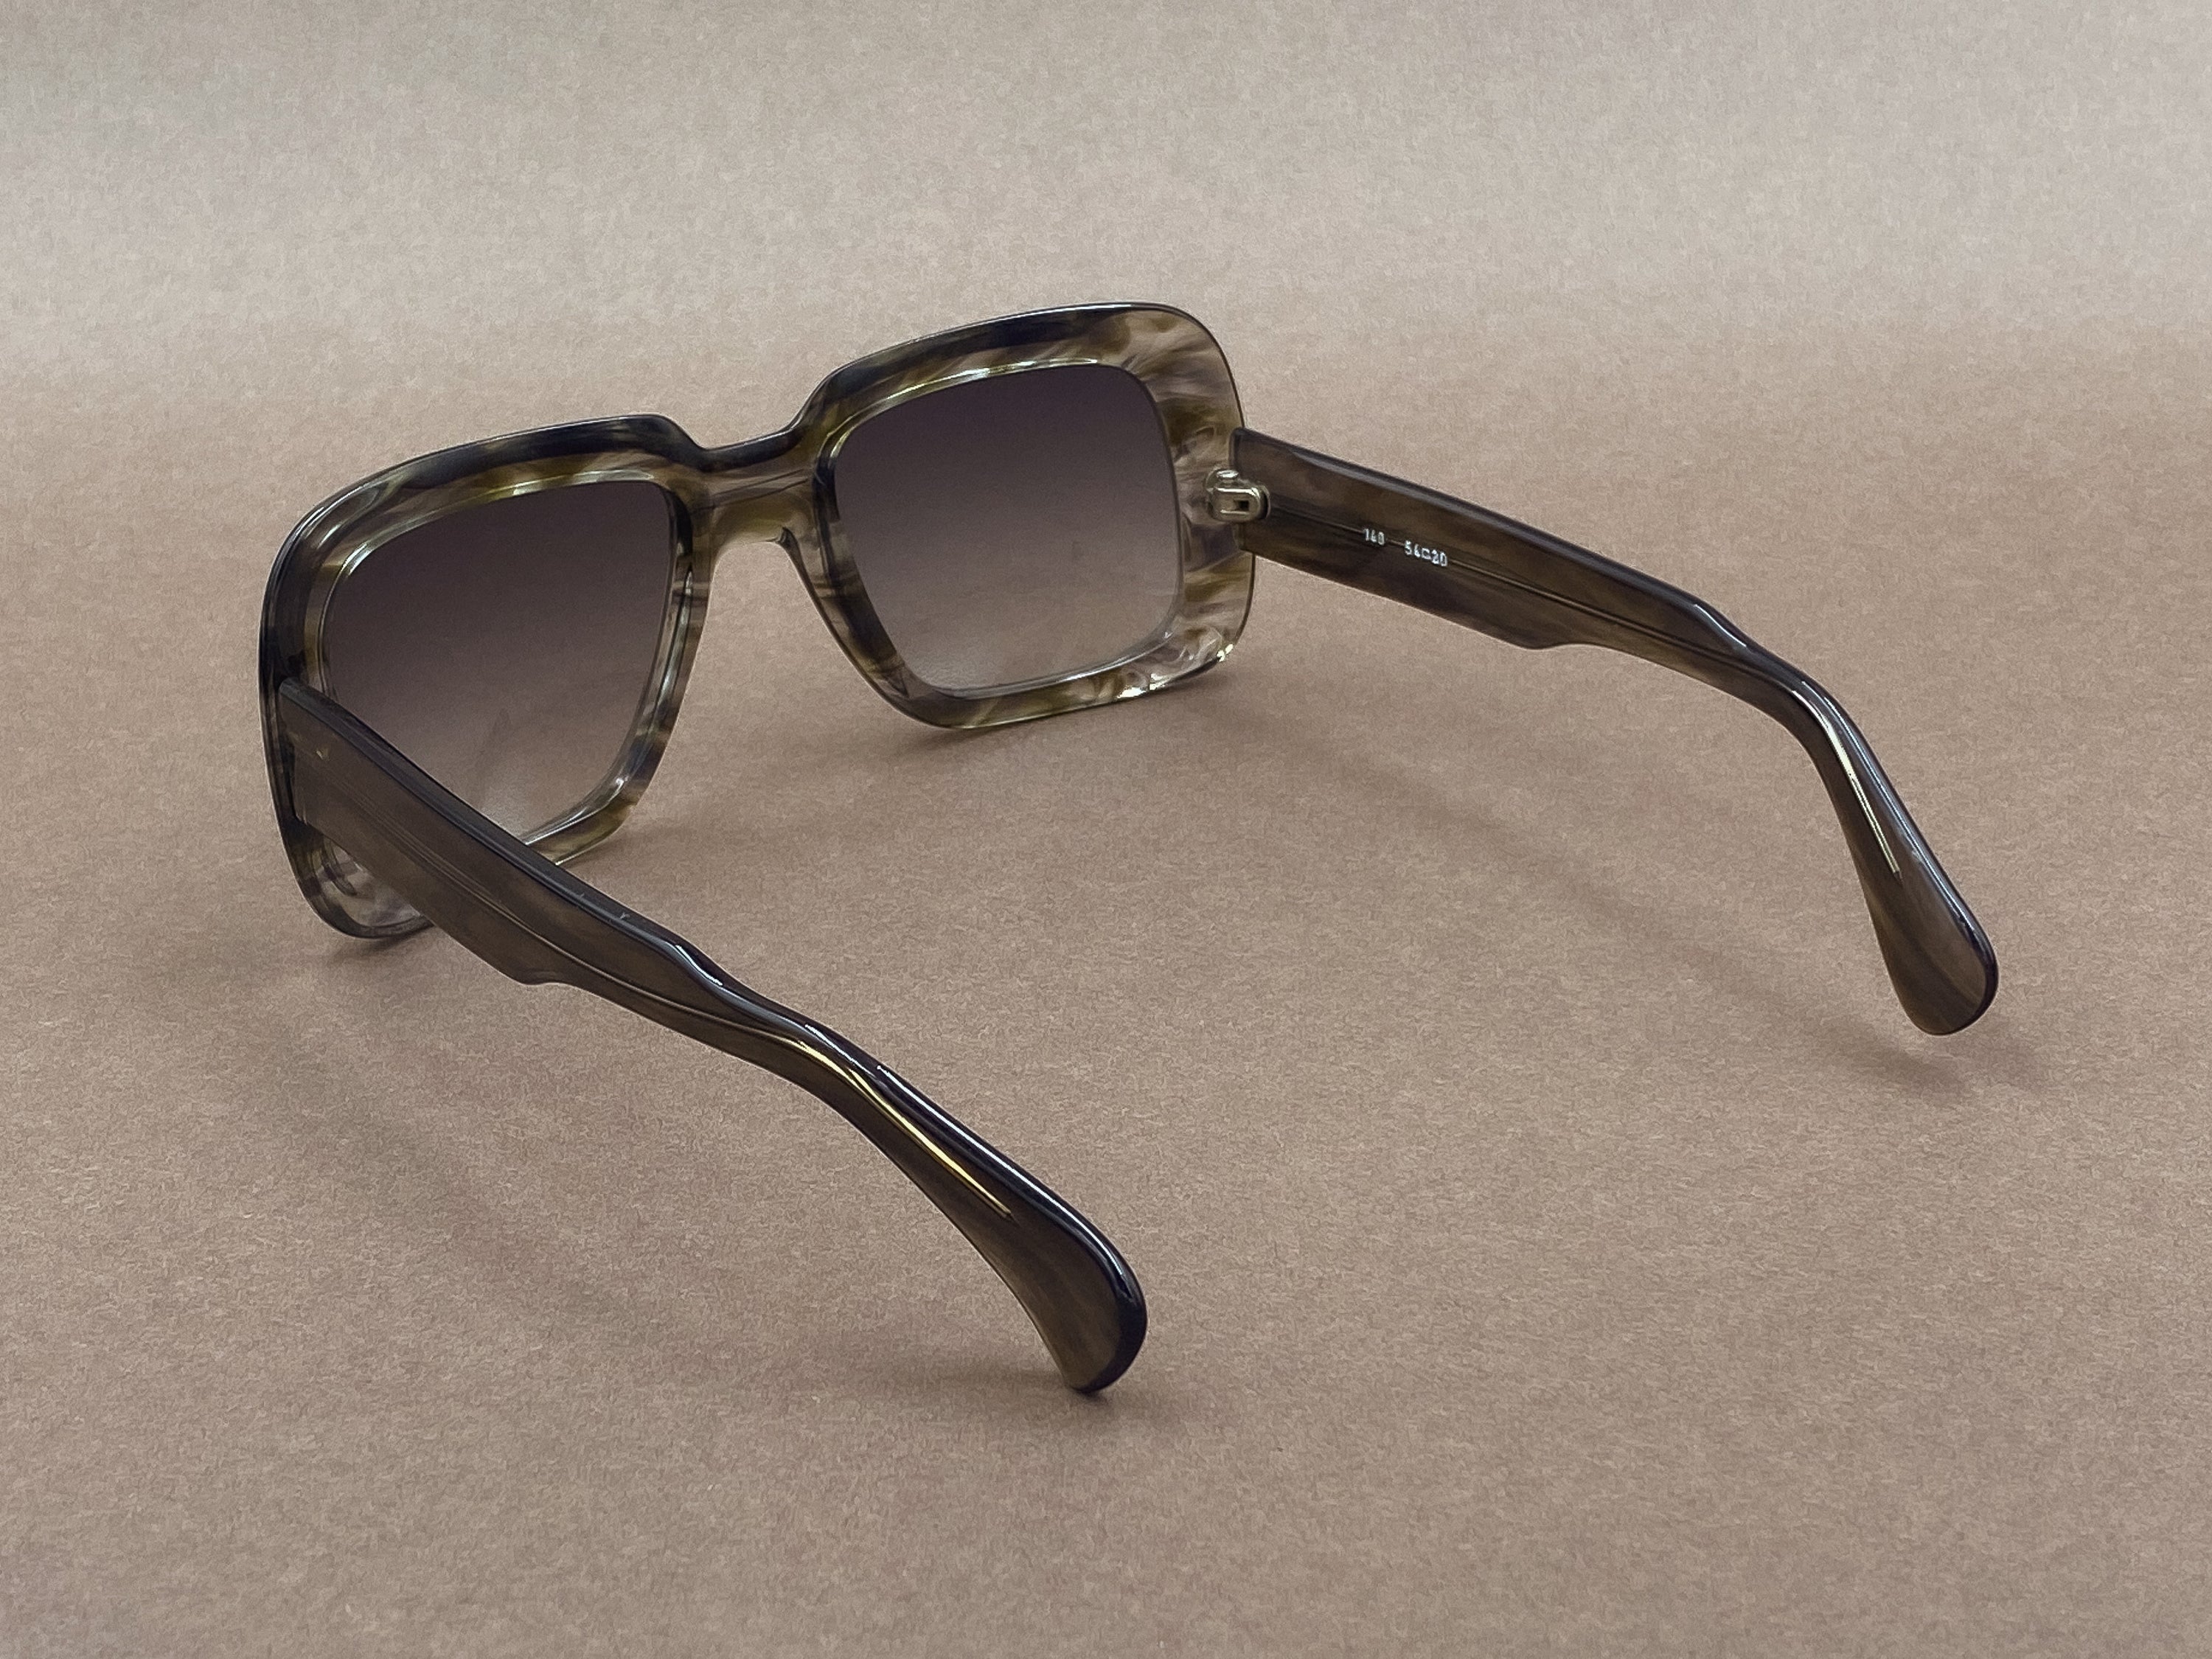 Menrad 1670 sunglasses